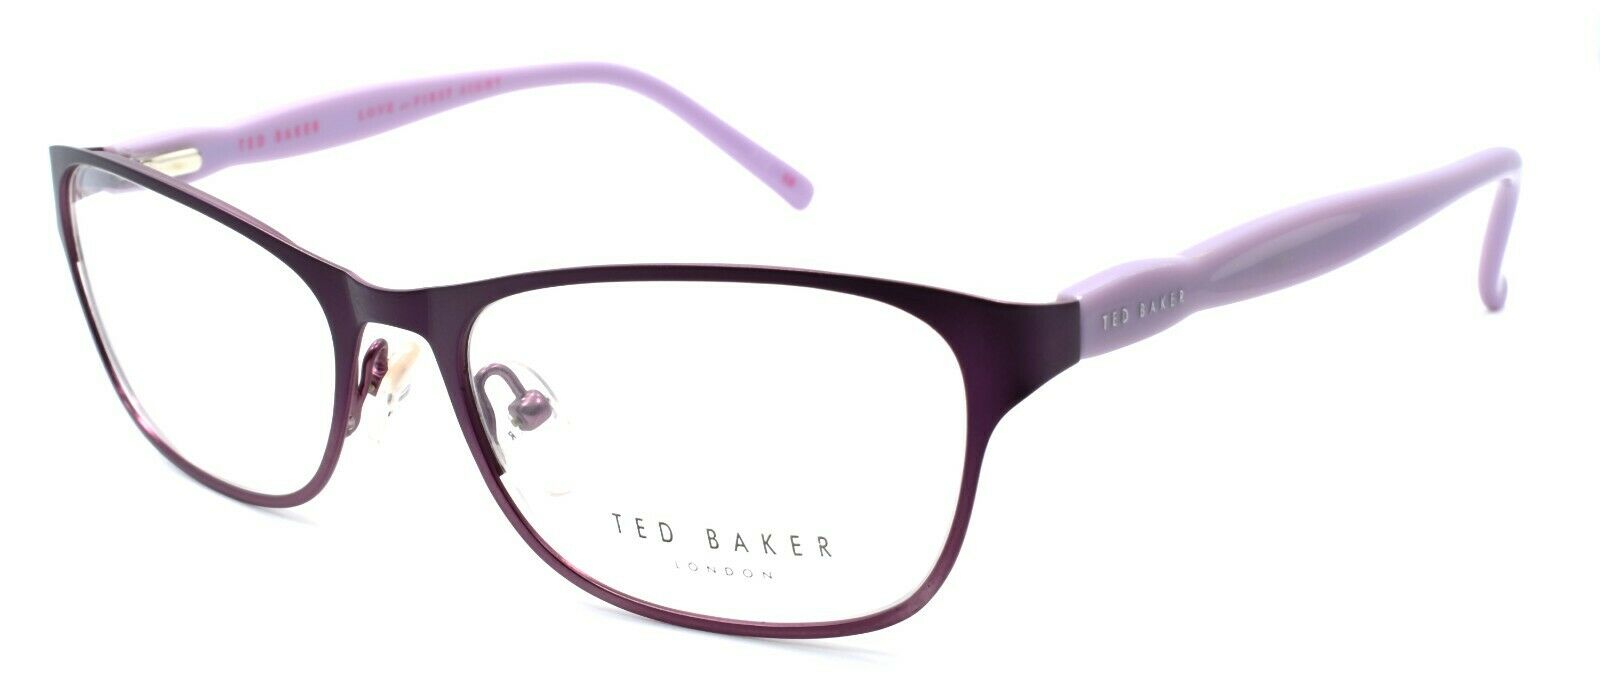 1-Ted Baker Rigger 2213 773 Women's Eyeglasses Frames 51-17-135 Purple / Lilac-4894327075850-IKSpecs